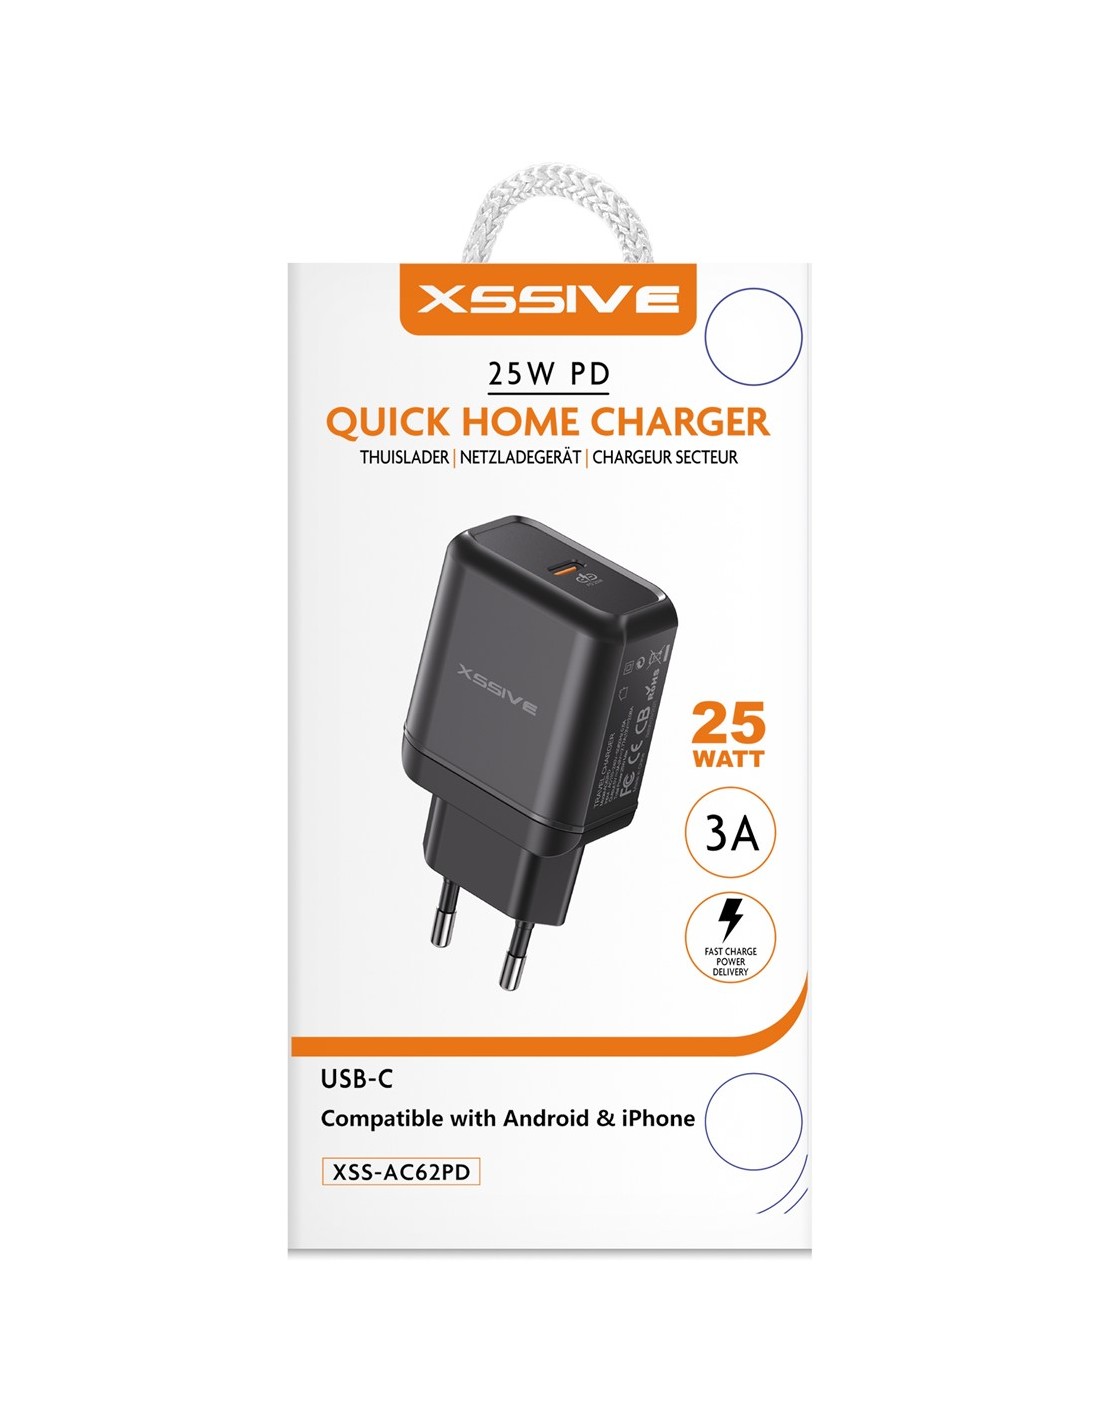 Adaptateur/chargeur universel USB-C - Chargeur rapide (25W